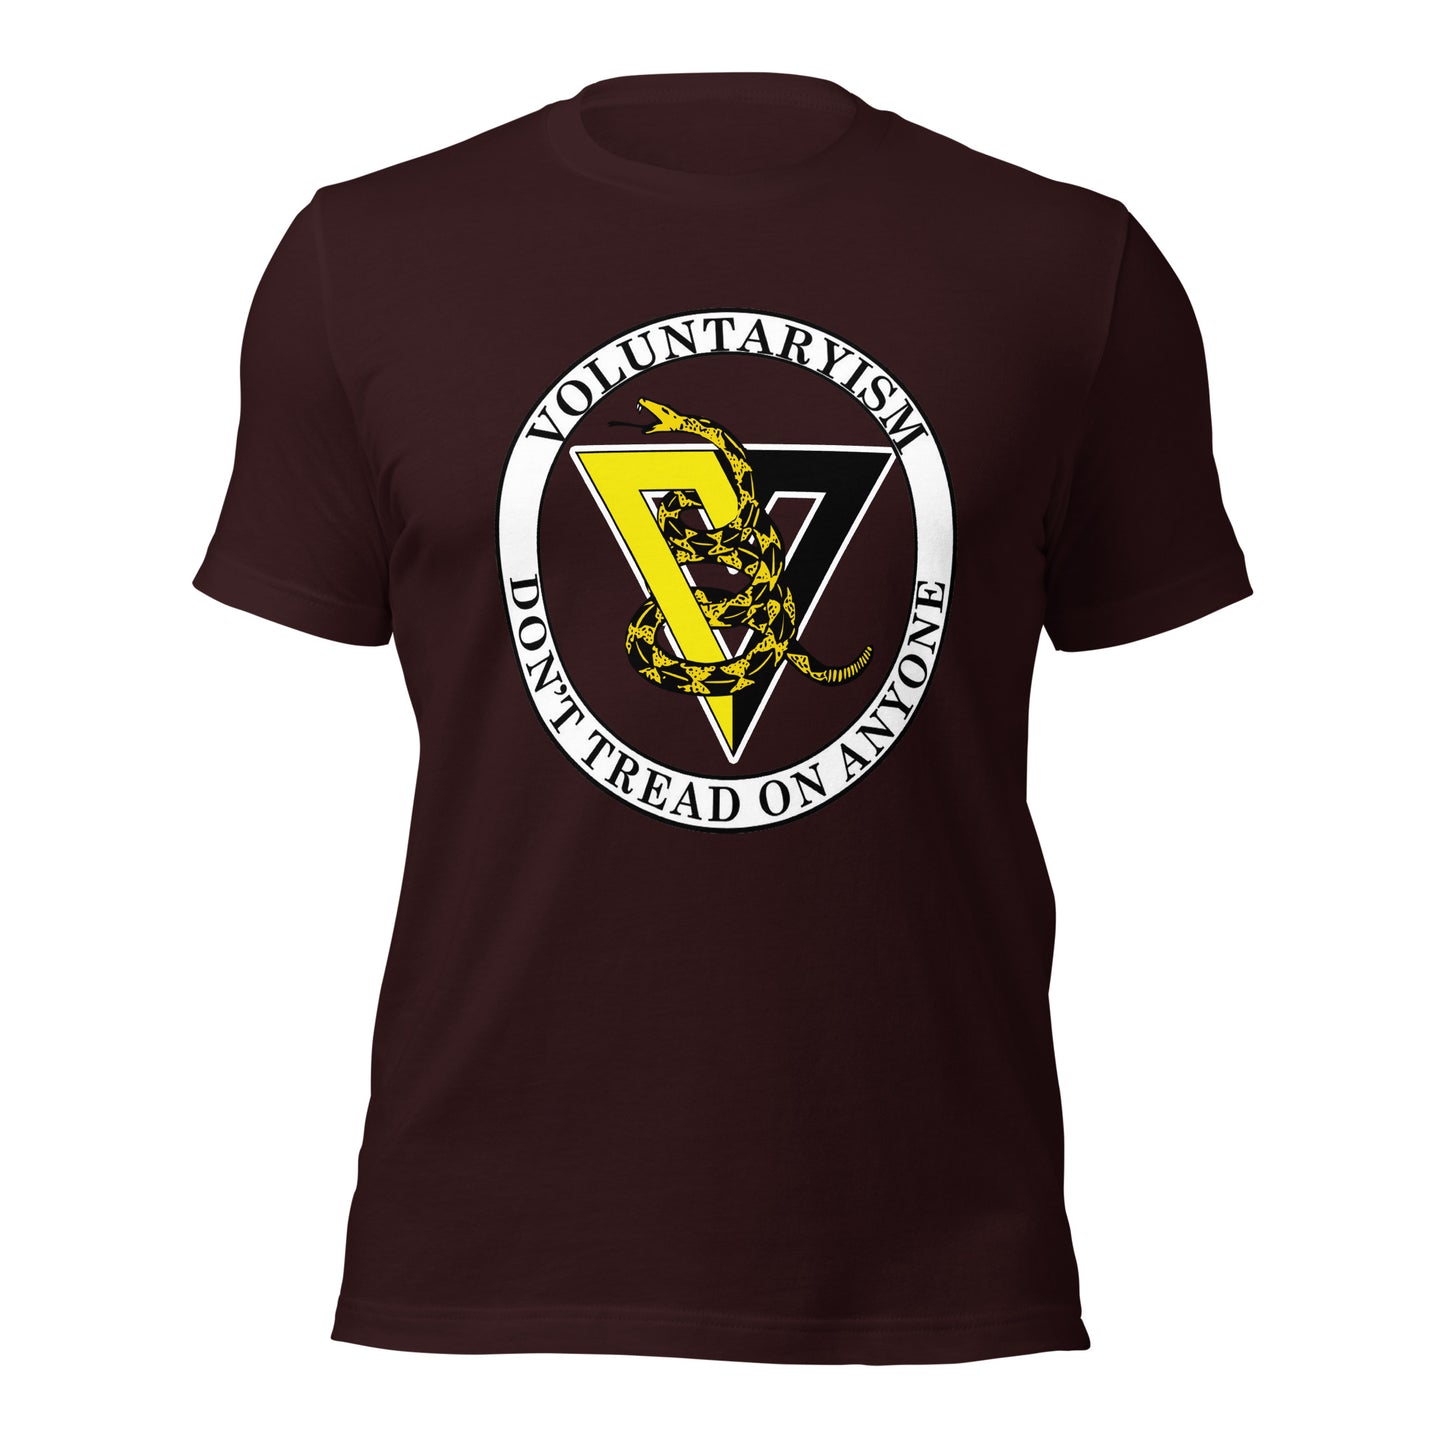 Voluntaryism - Don't tread on anyone - Unisex t-shirt